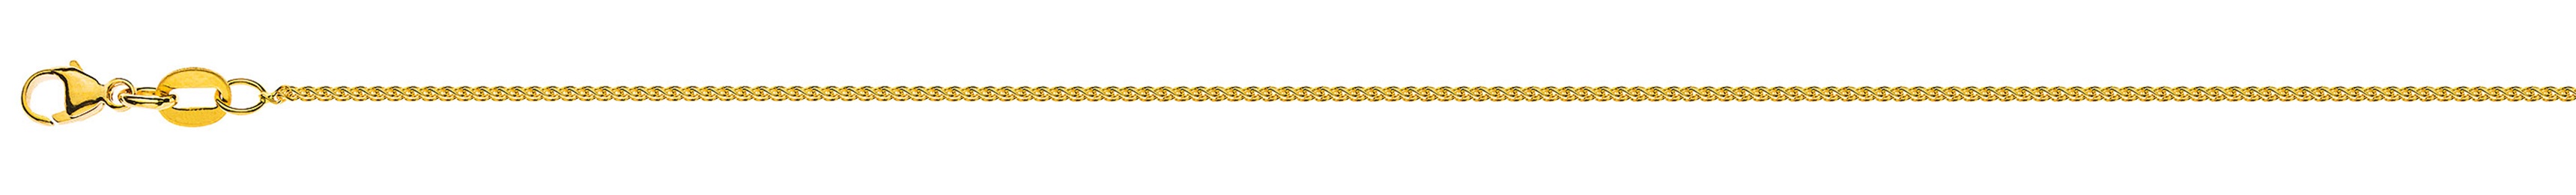 AURONOS Prestige Necklace yellow gold 18K cable chain 60cm 1.0mm